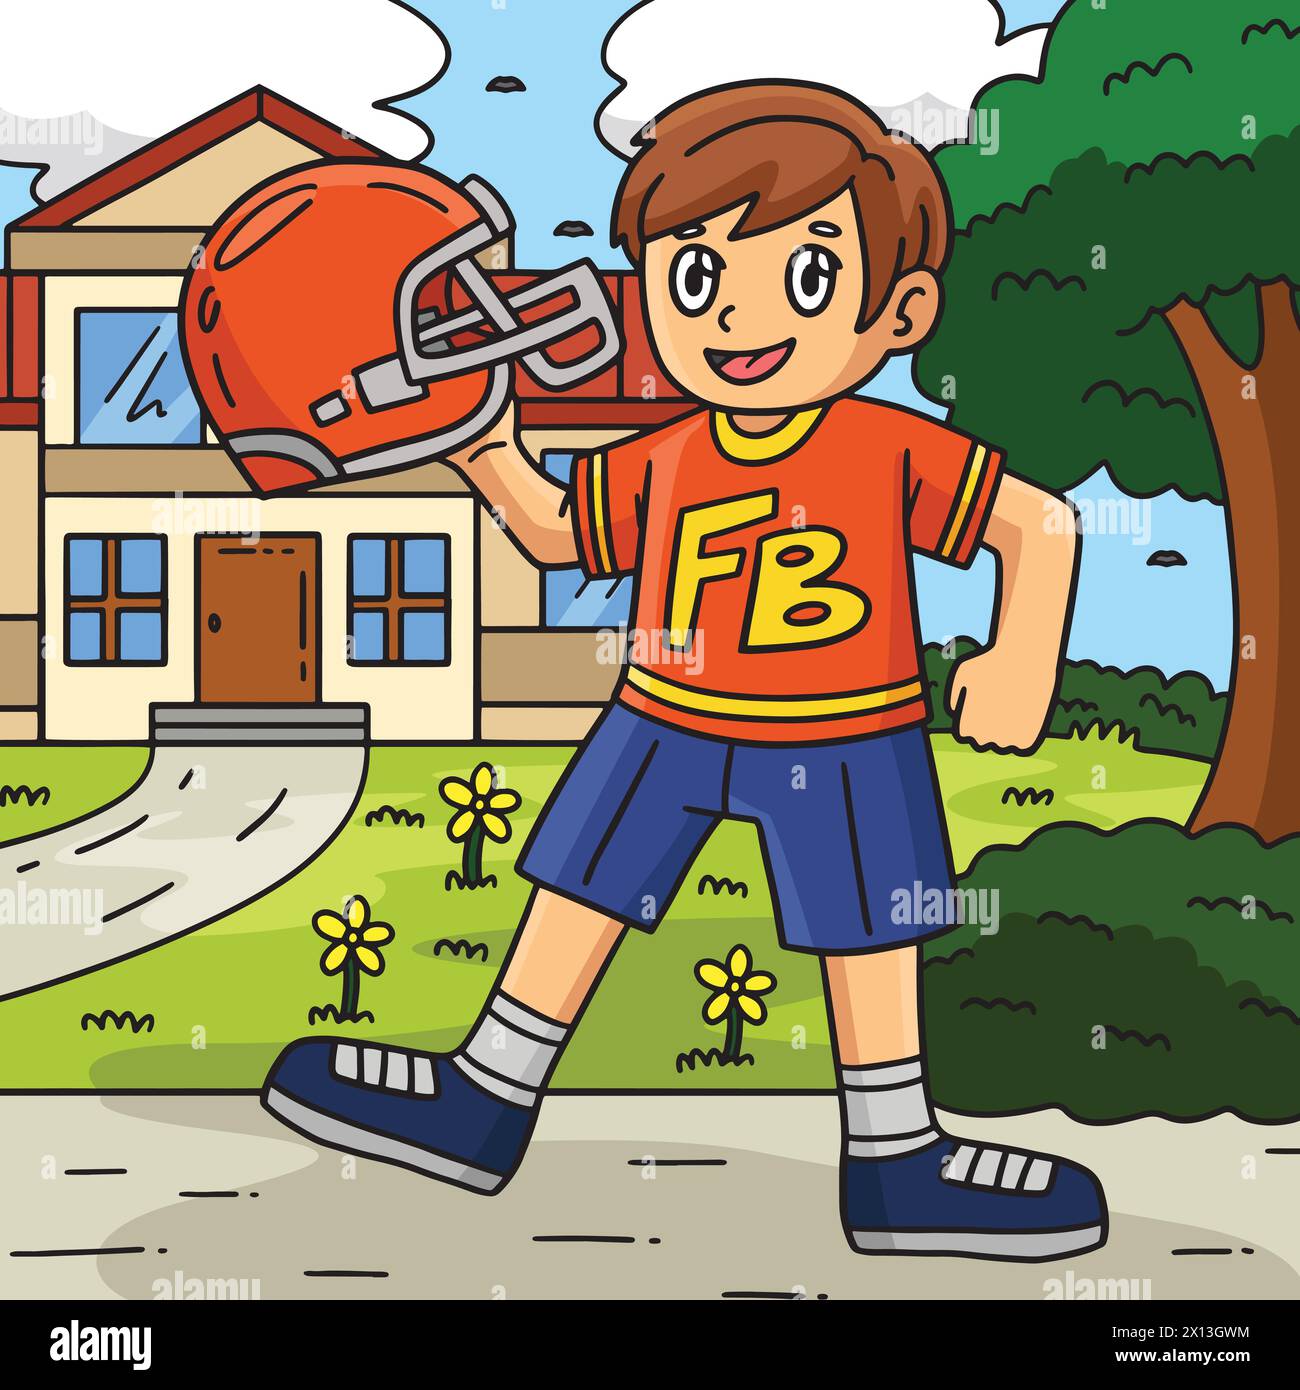 American Football Boy with Helmet Colored Cartoon Stock Vector